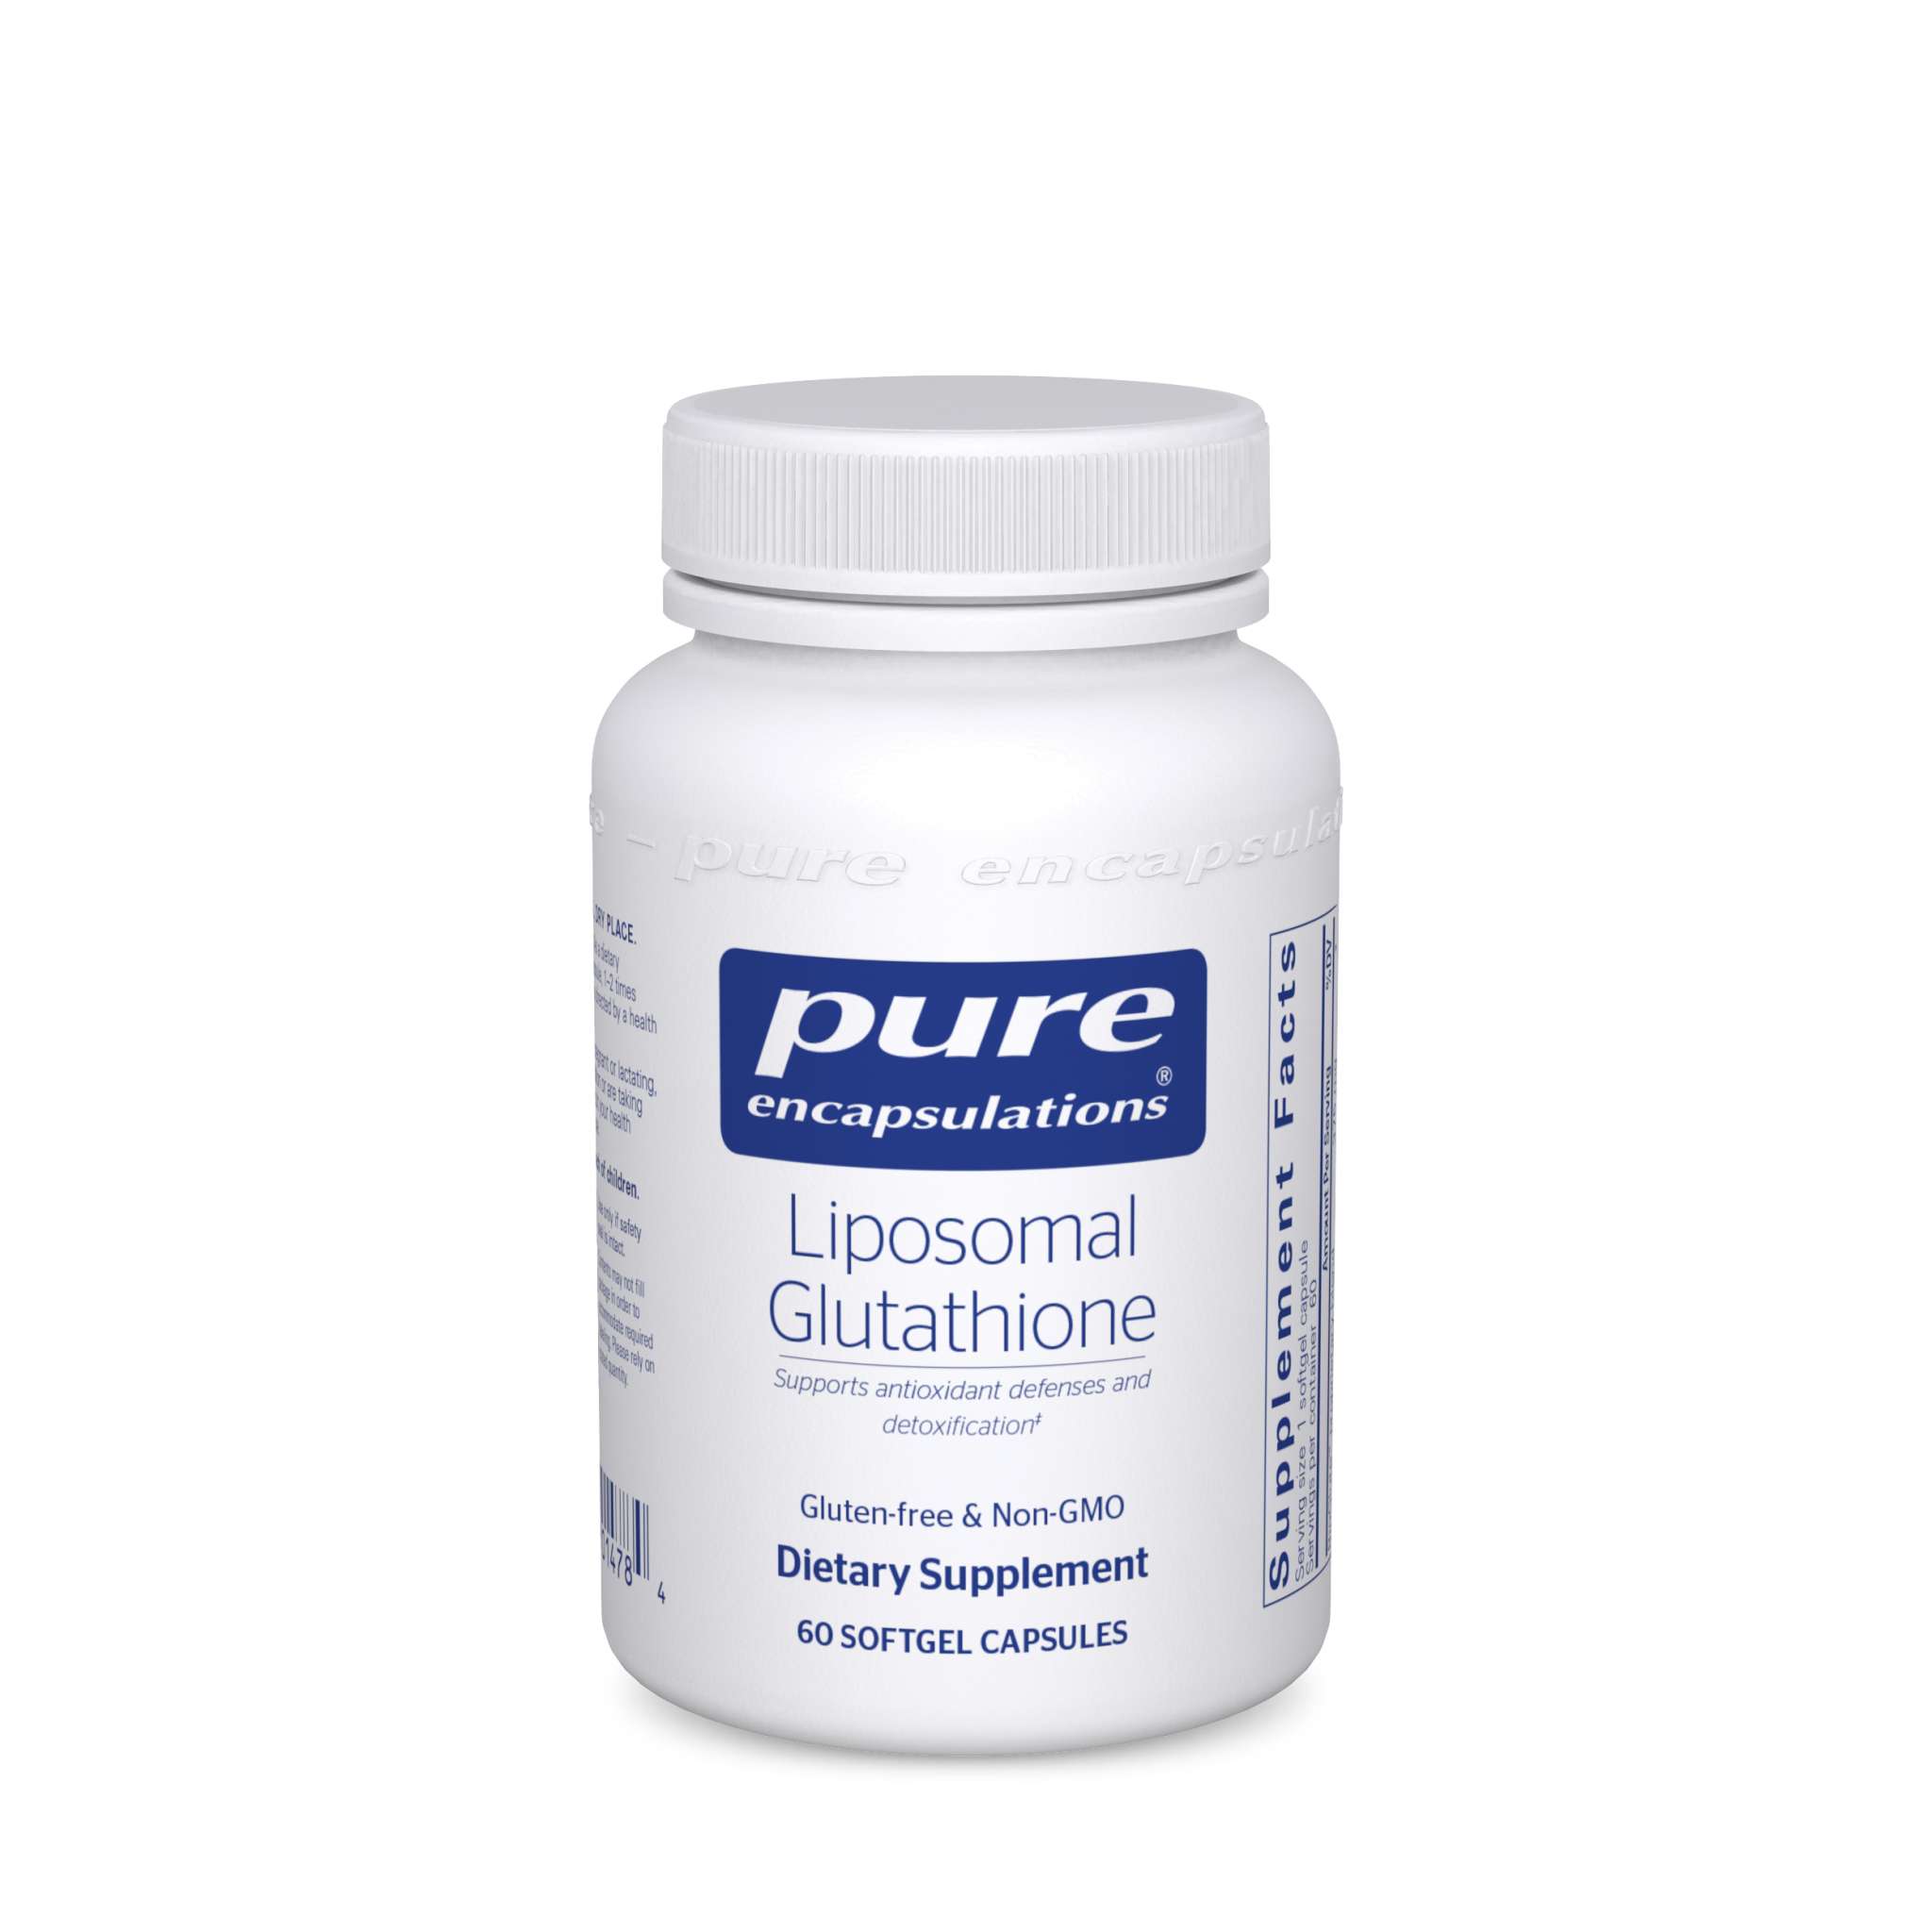 Pure Encapsulations - Glutathione Liposomal